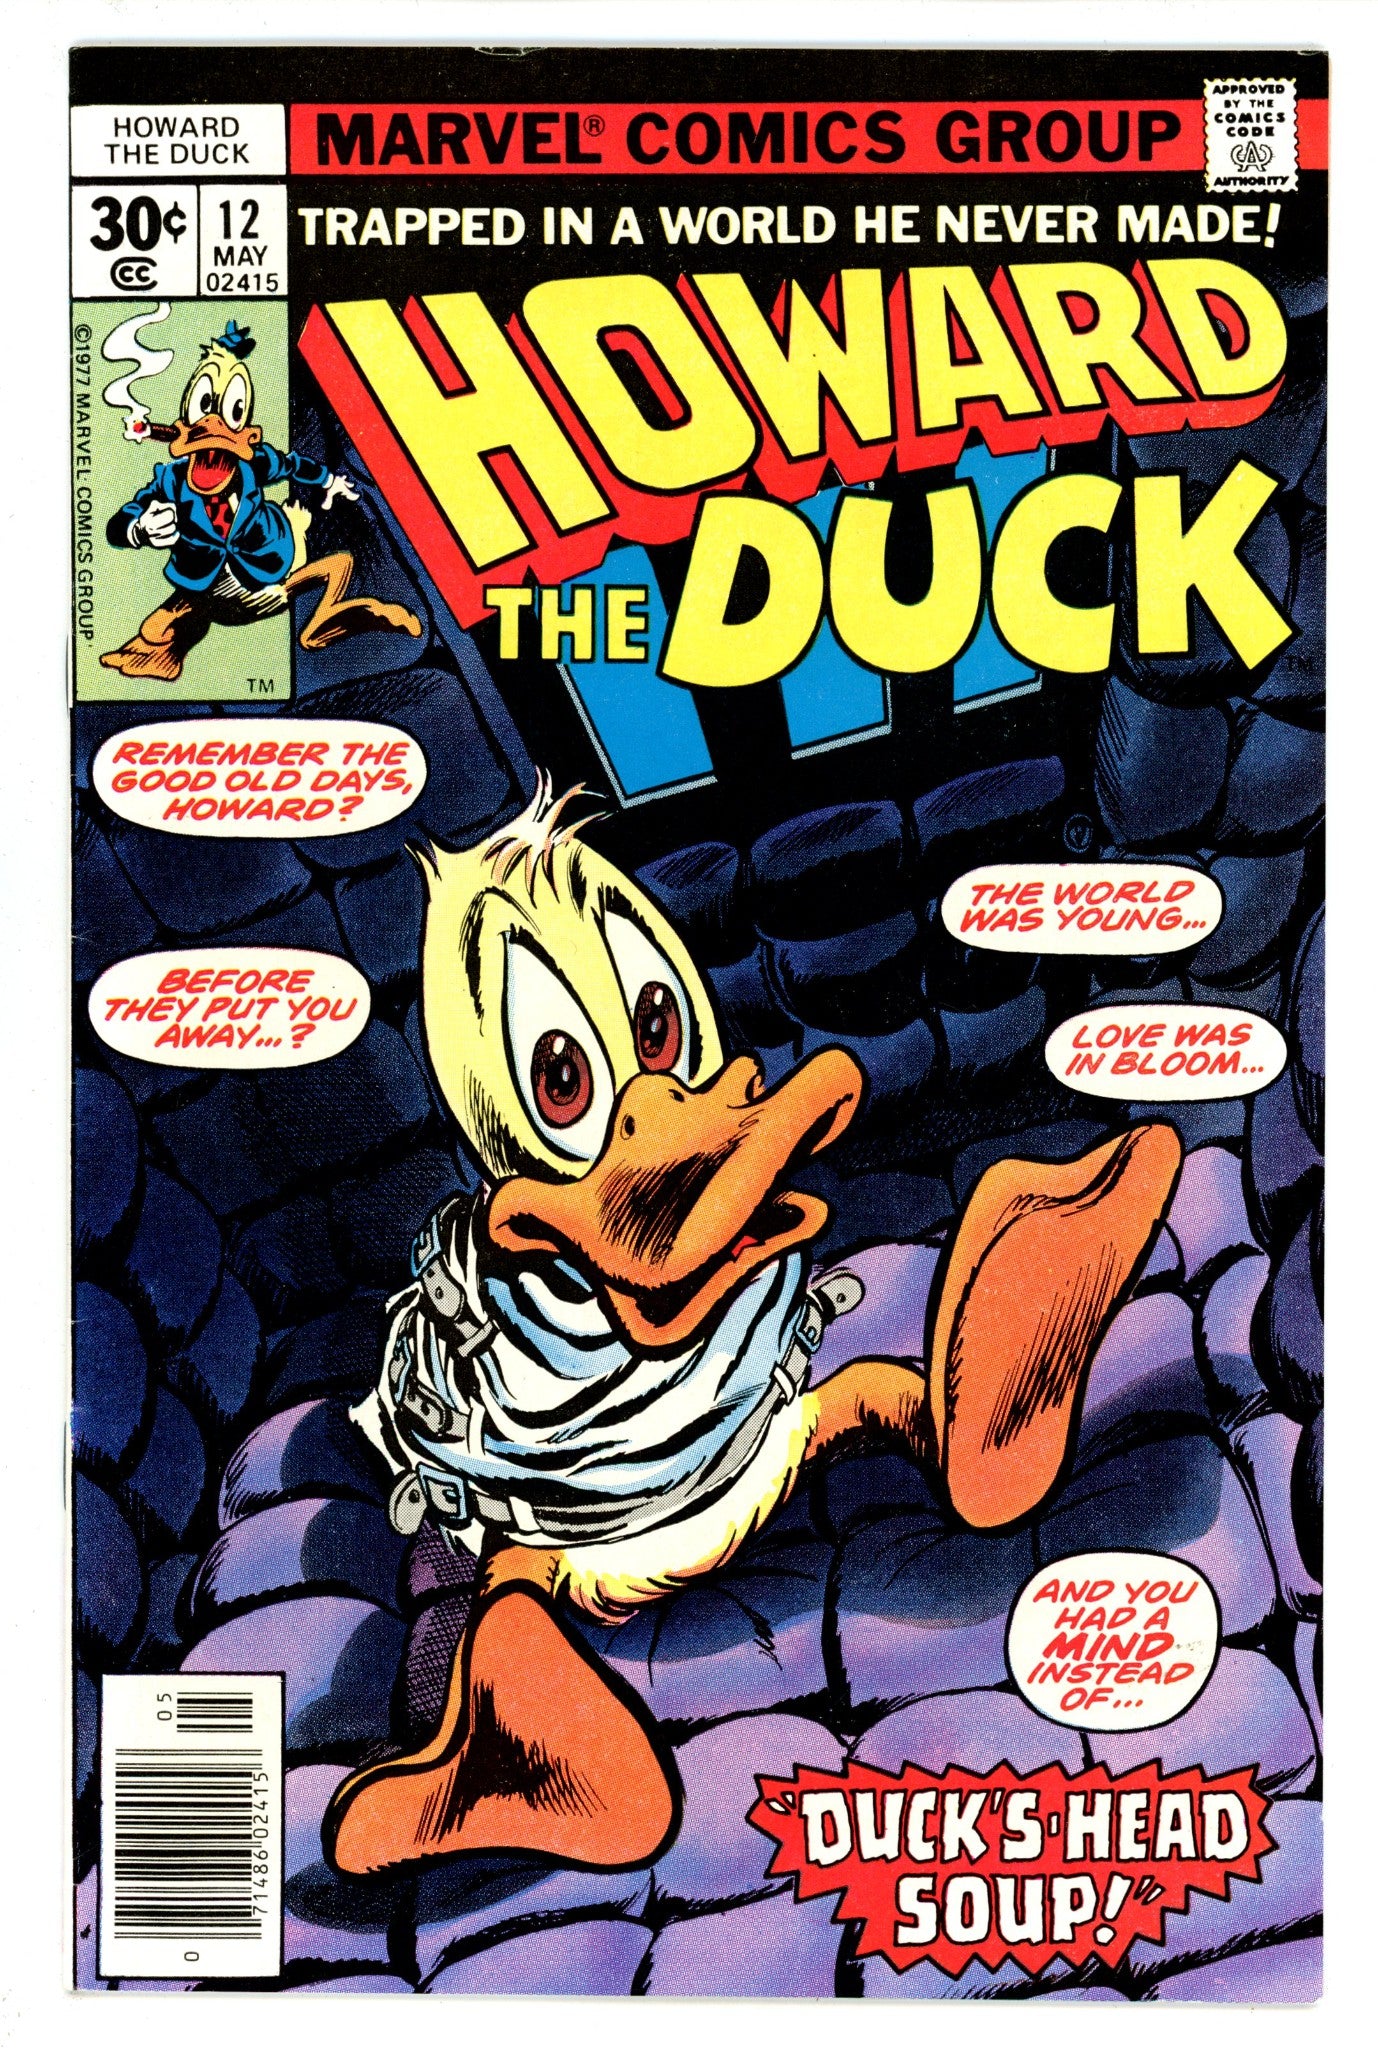 Howard the Duck Vol 1 12 VF- (7.5) (1977) 